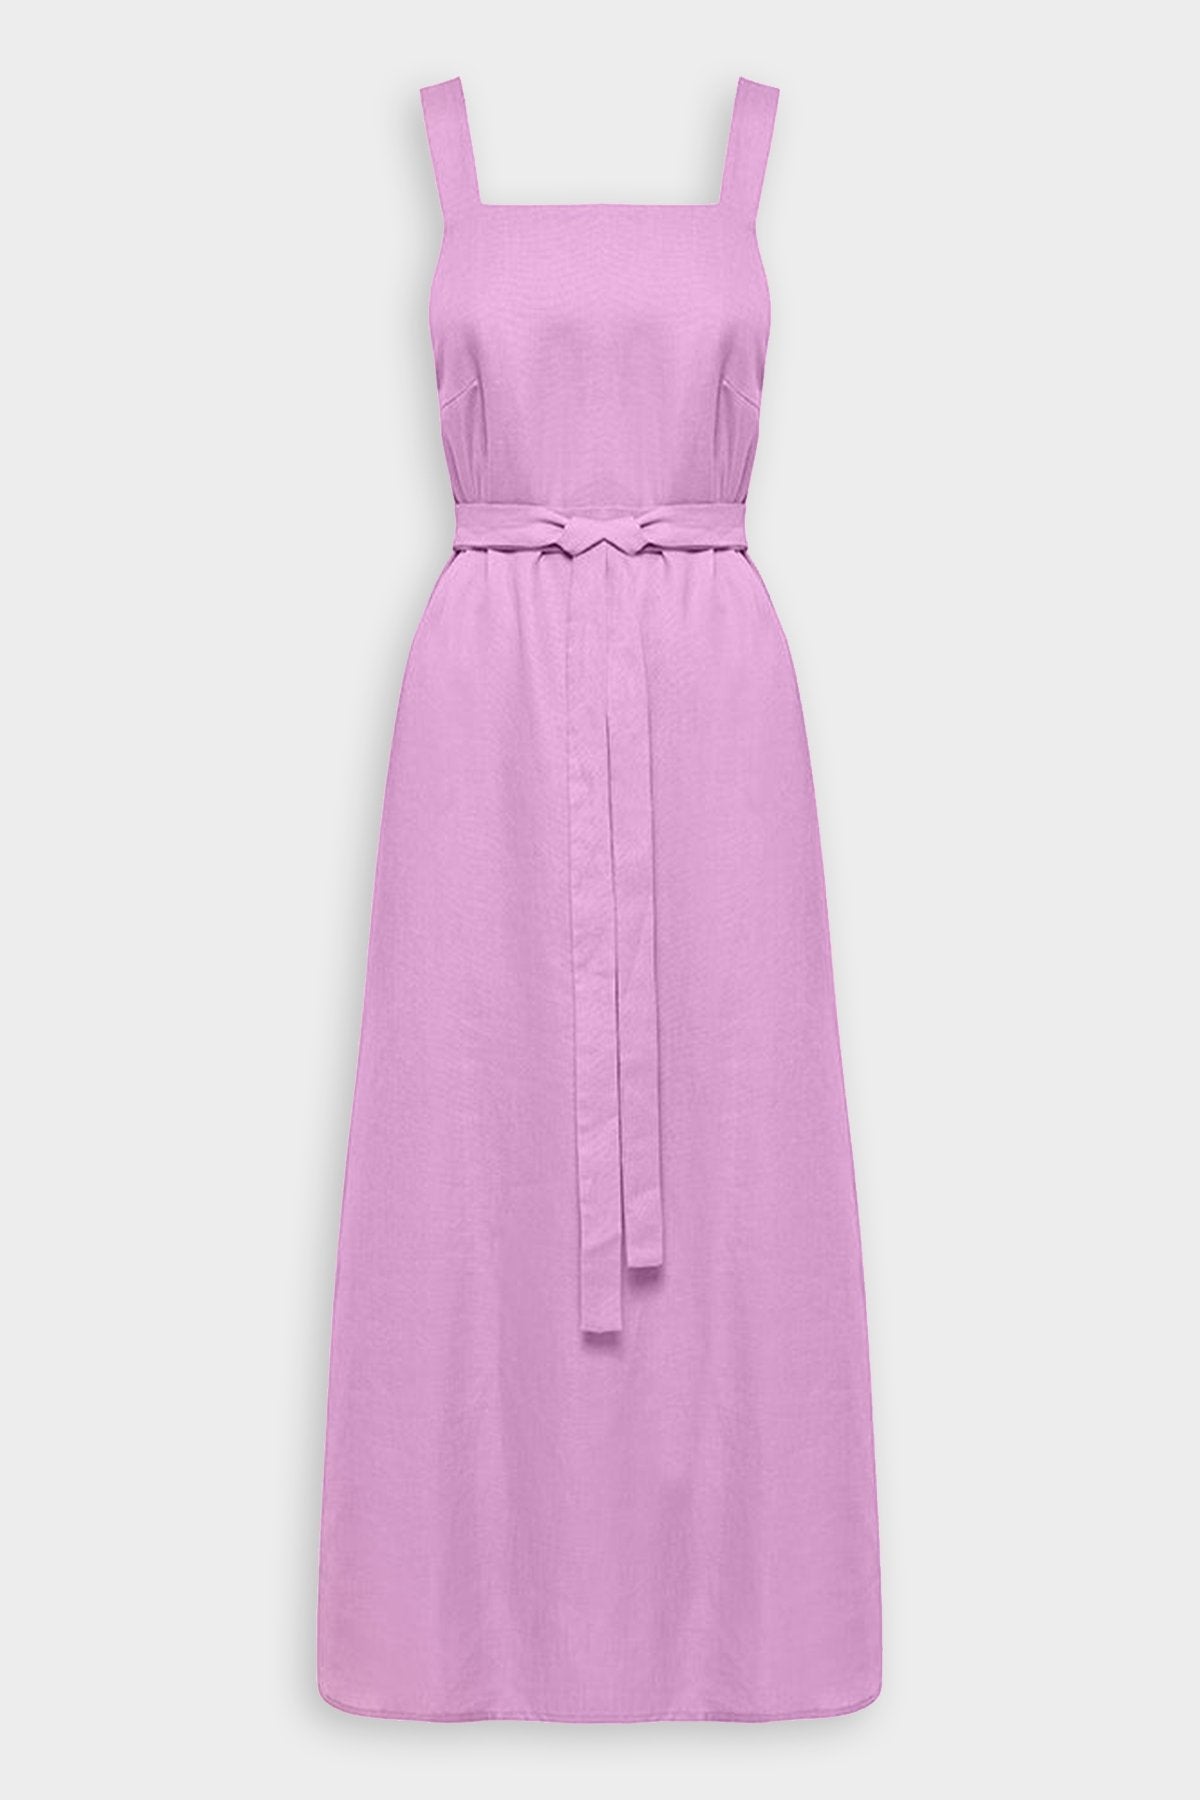 Mustique Organic Linen Dress in Helio - shop-olivia.com